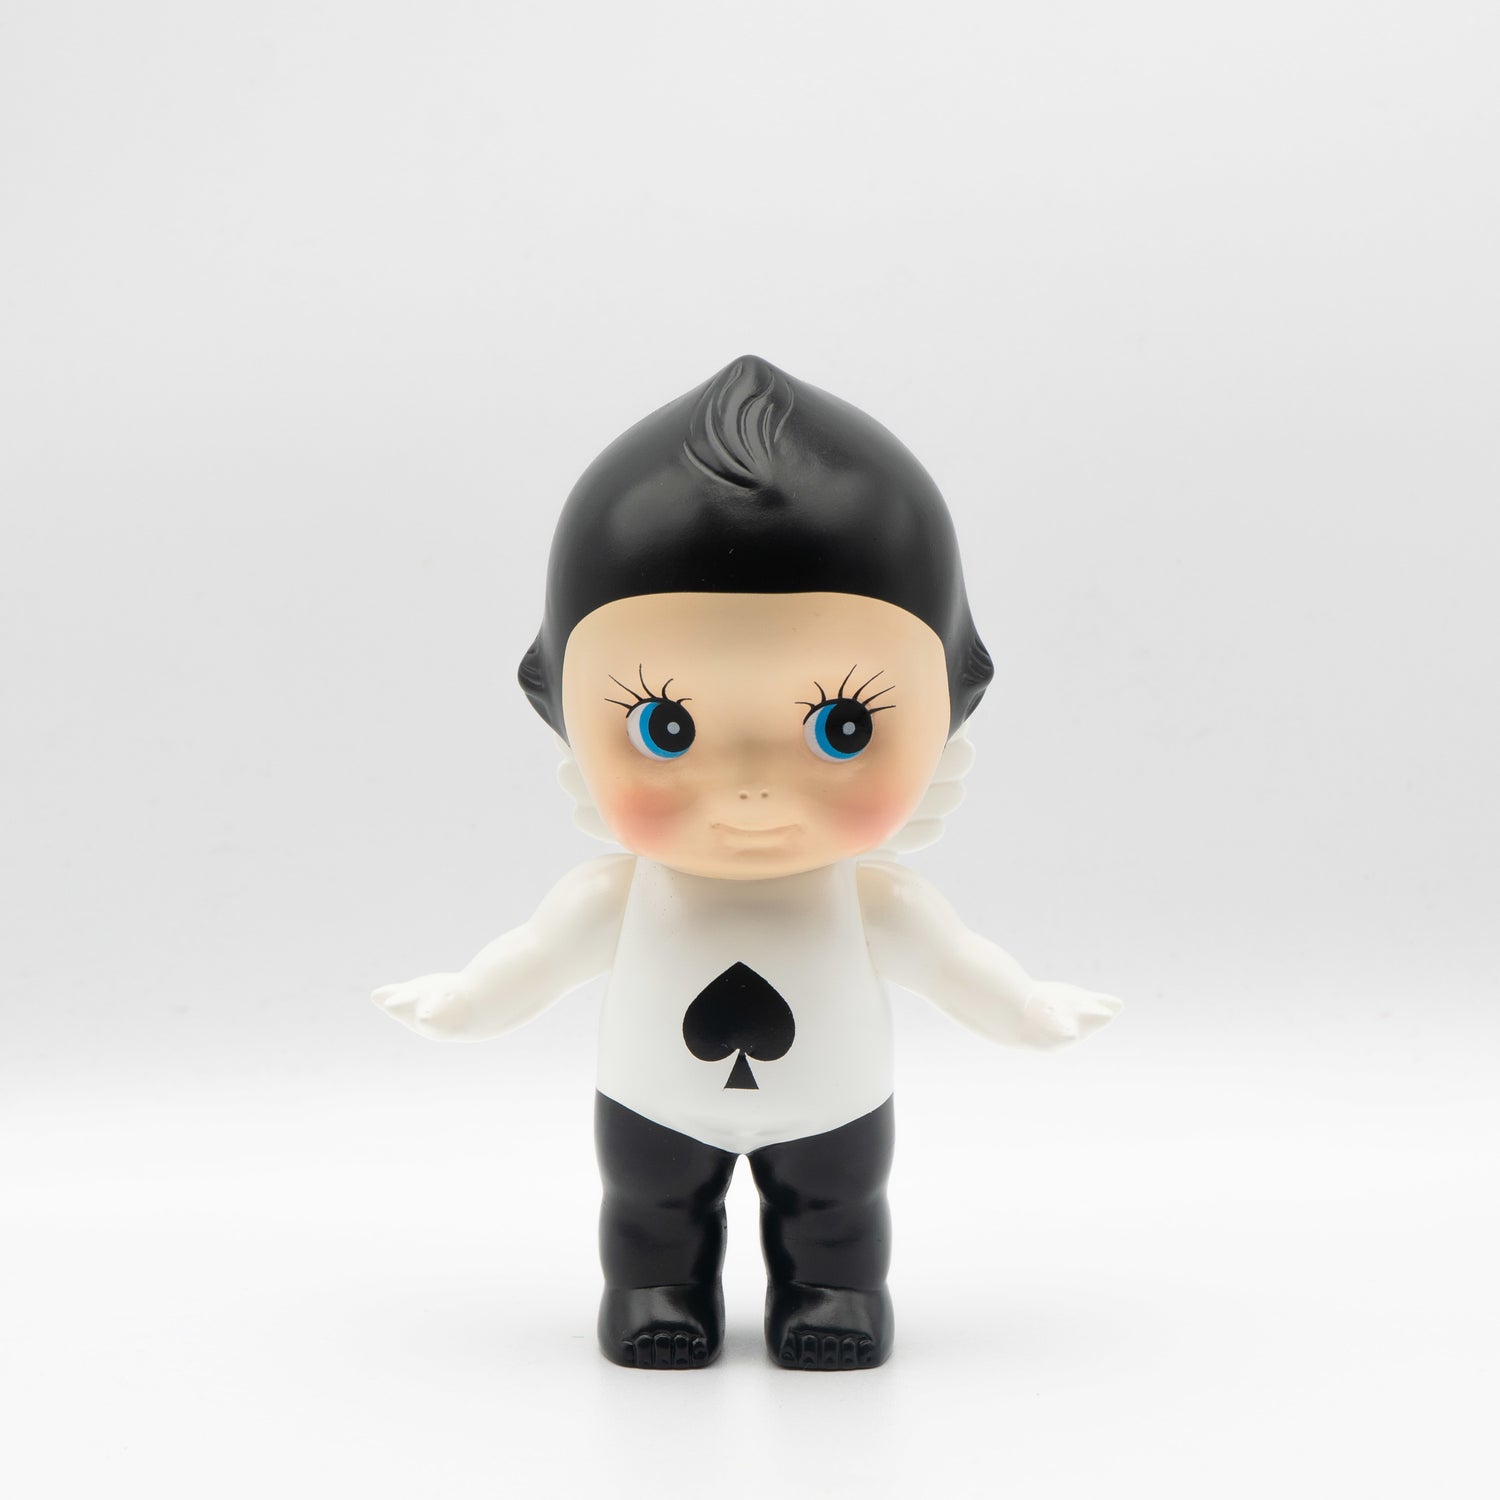 Obitsu Kewpie Doll - “Wonderland” special version